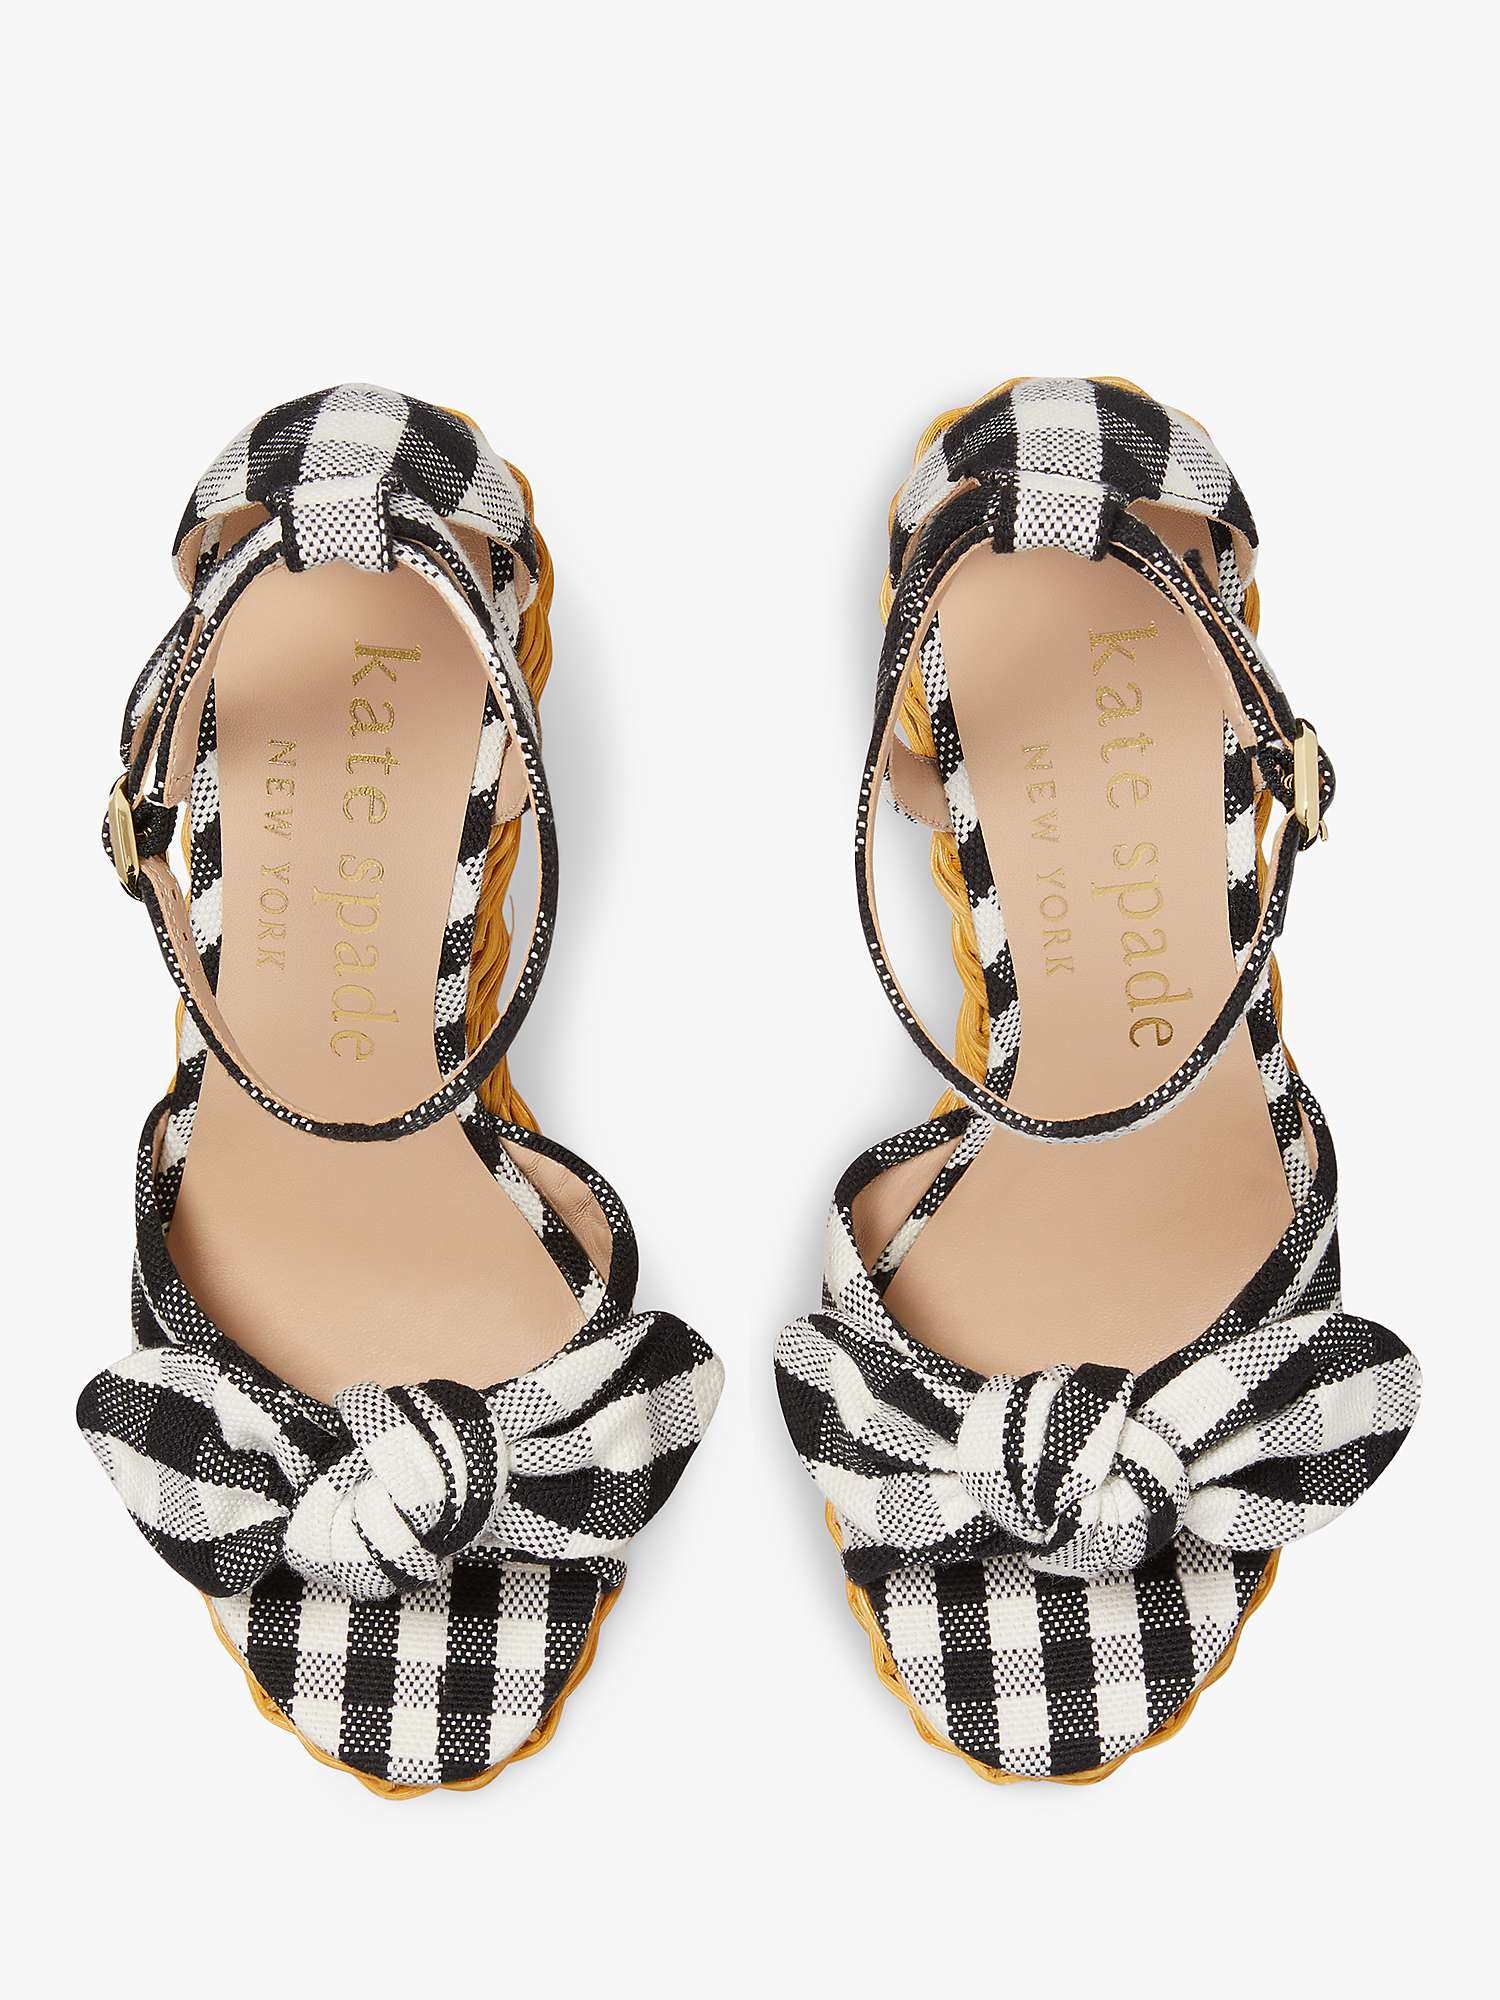 Buy kate spade new york Tianna Wicker Wedge Heel Sandals, Black/Cream Online at johnlewis.com